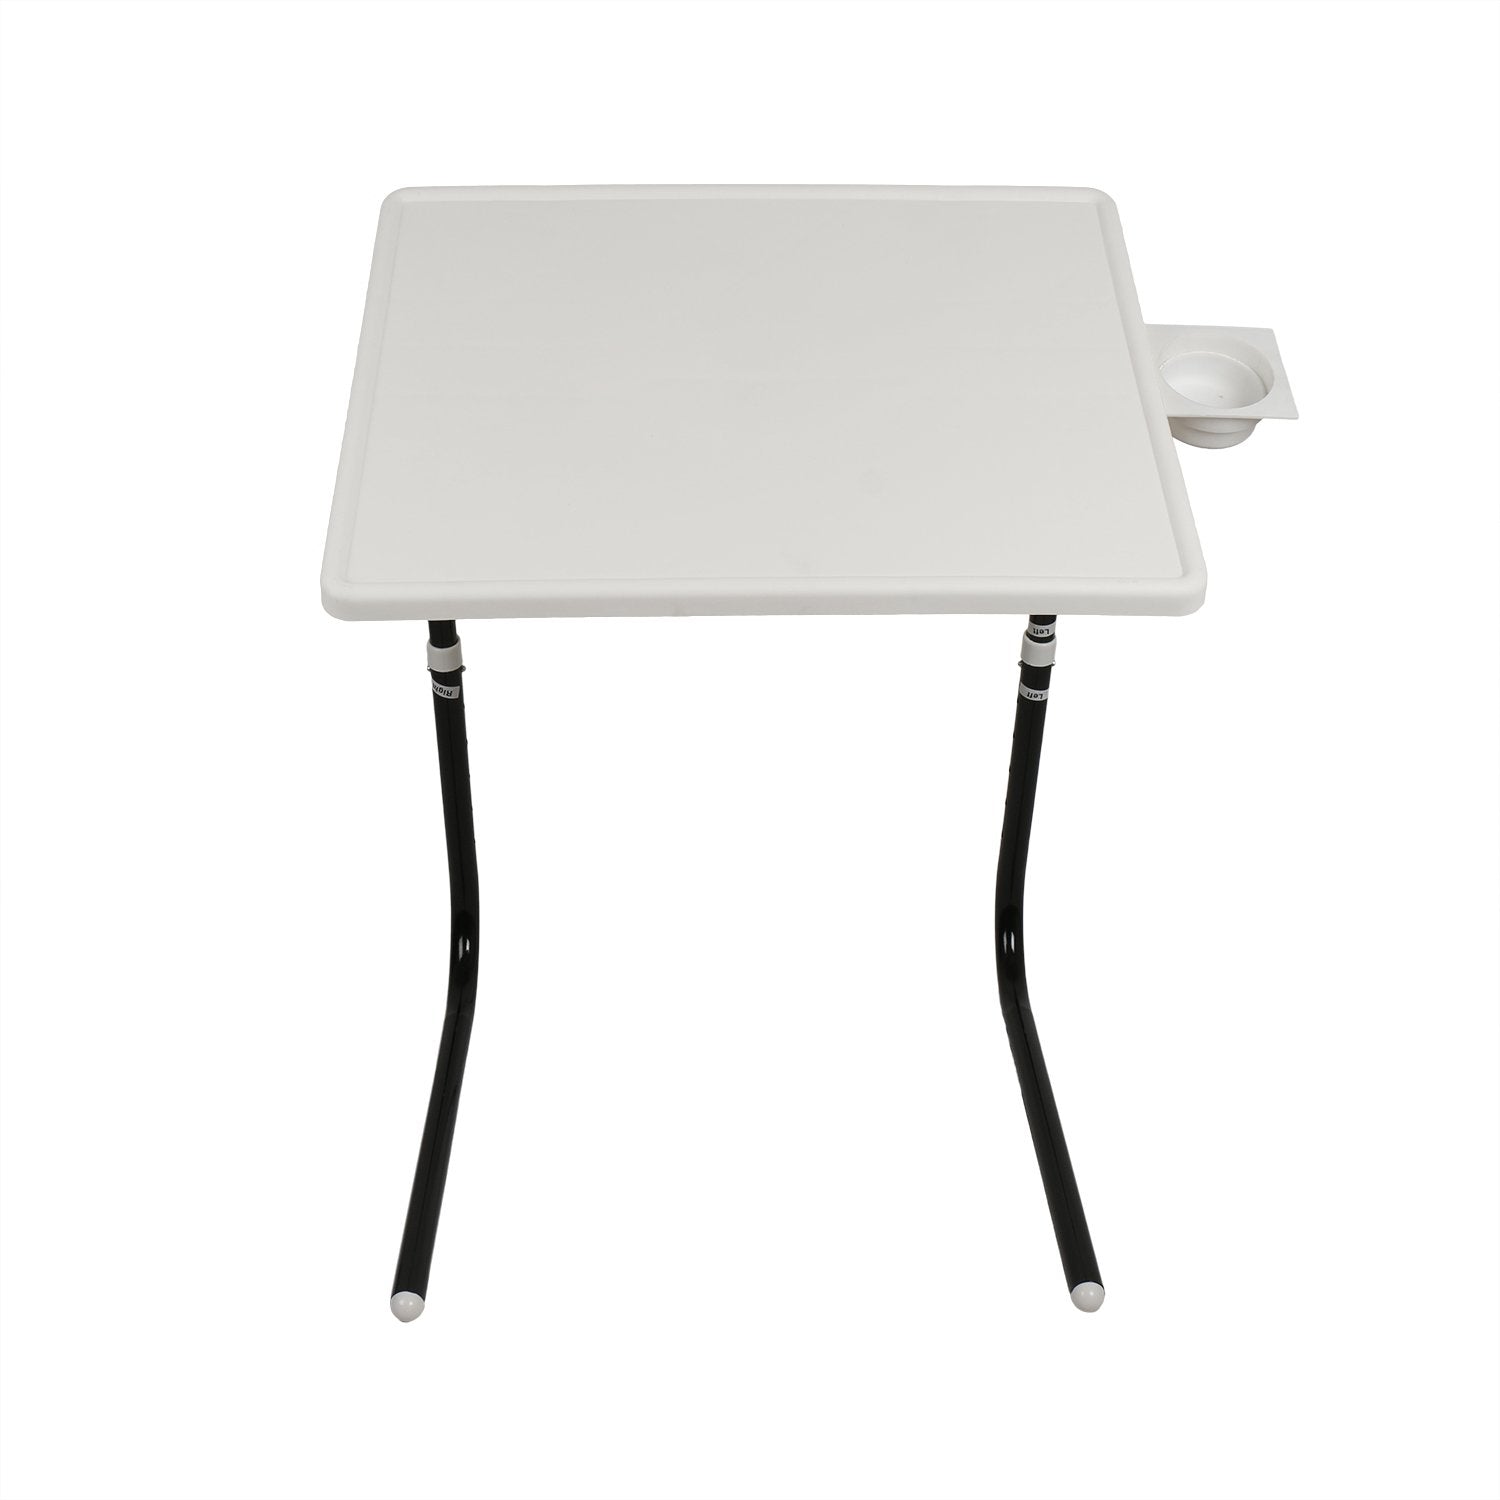 Multi utility Laptop Table with Black legs Combo pack Medium Black & White